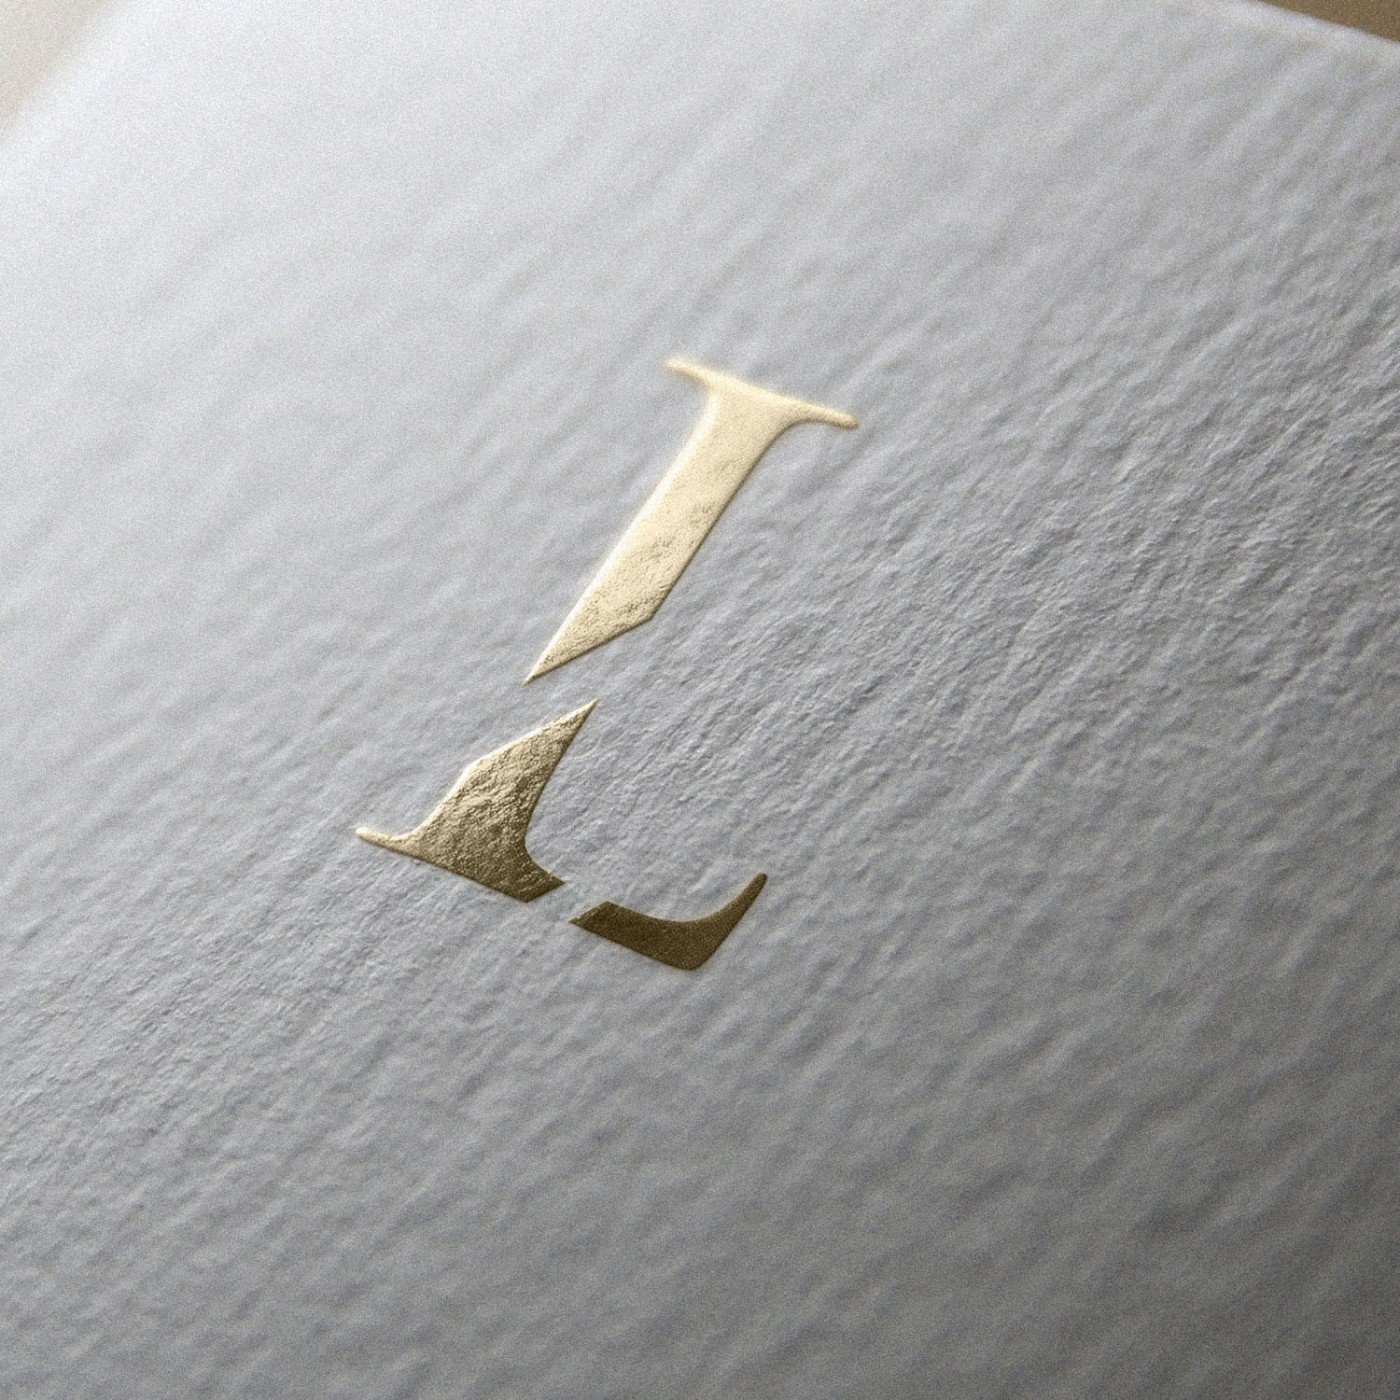 HUBOIS - Luxury Brand Logo Design - JM Graphic Design